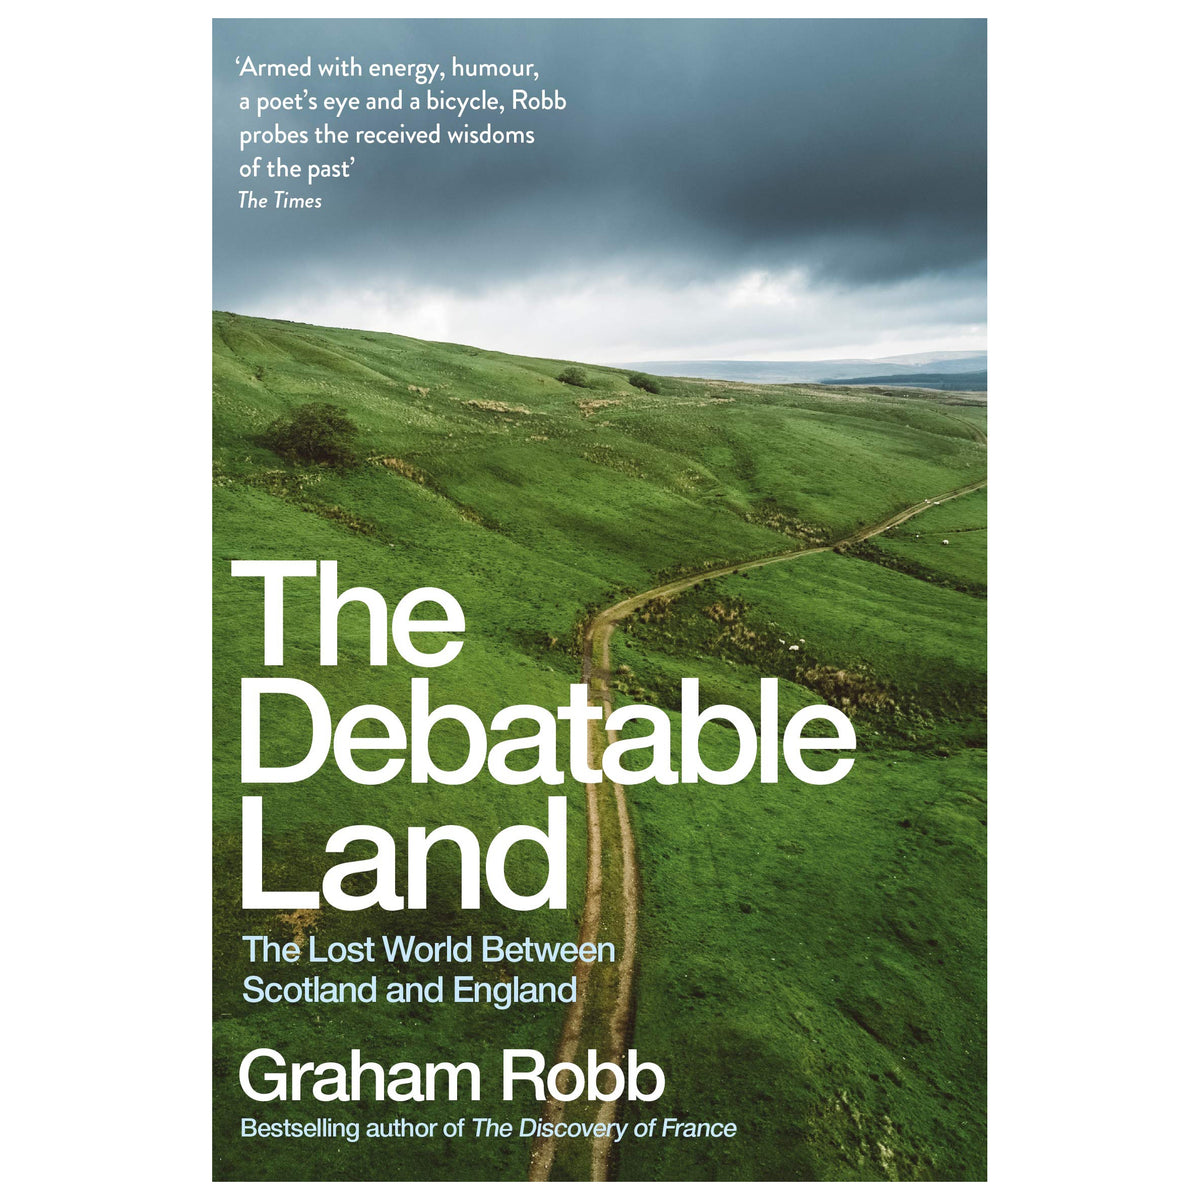 The Debatable Land